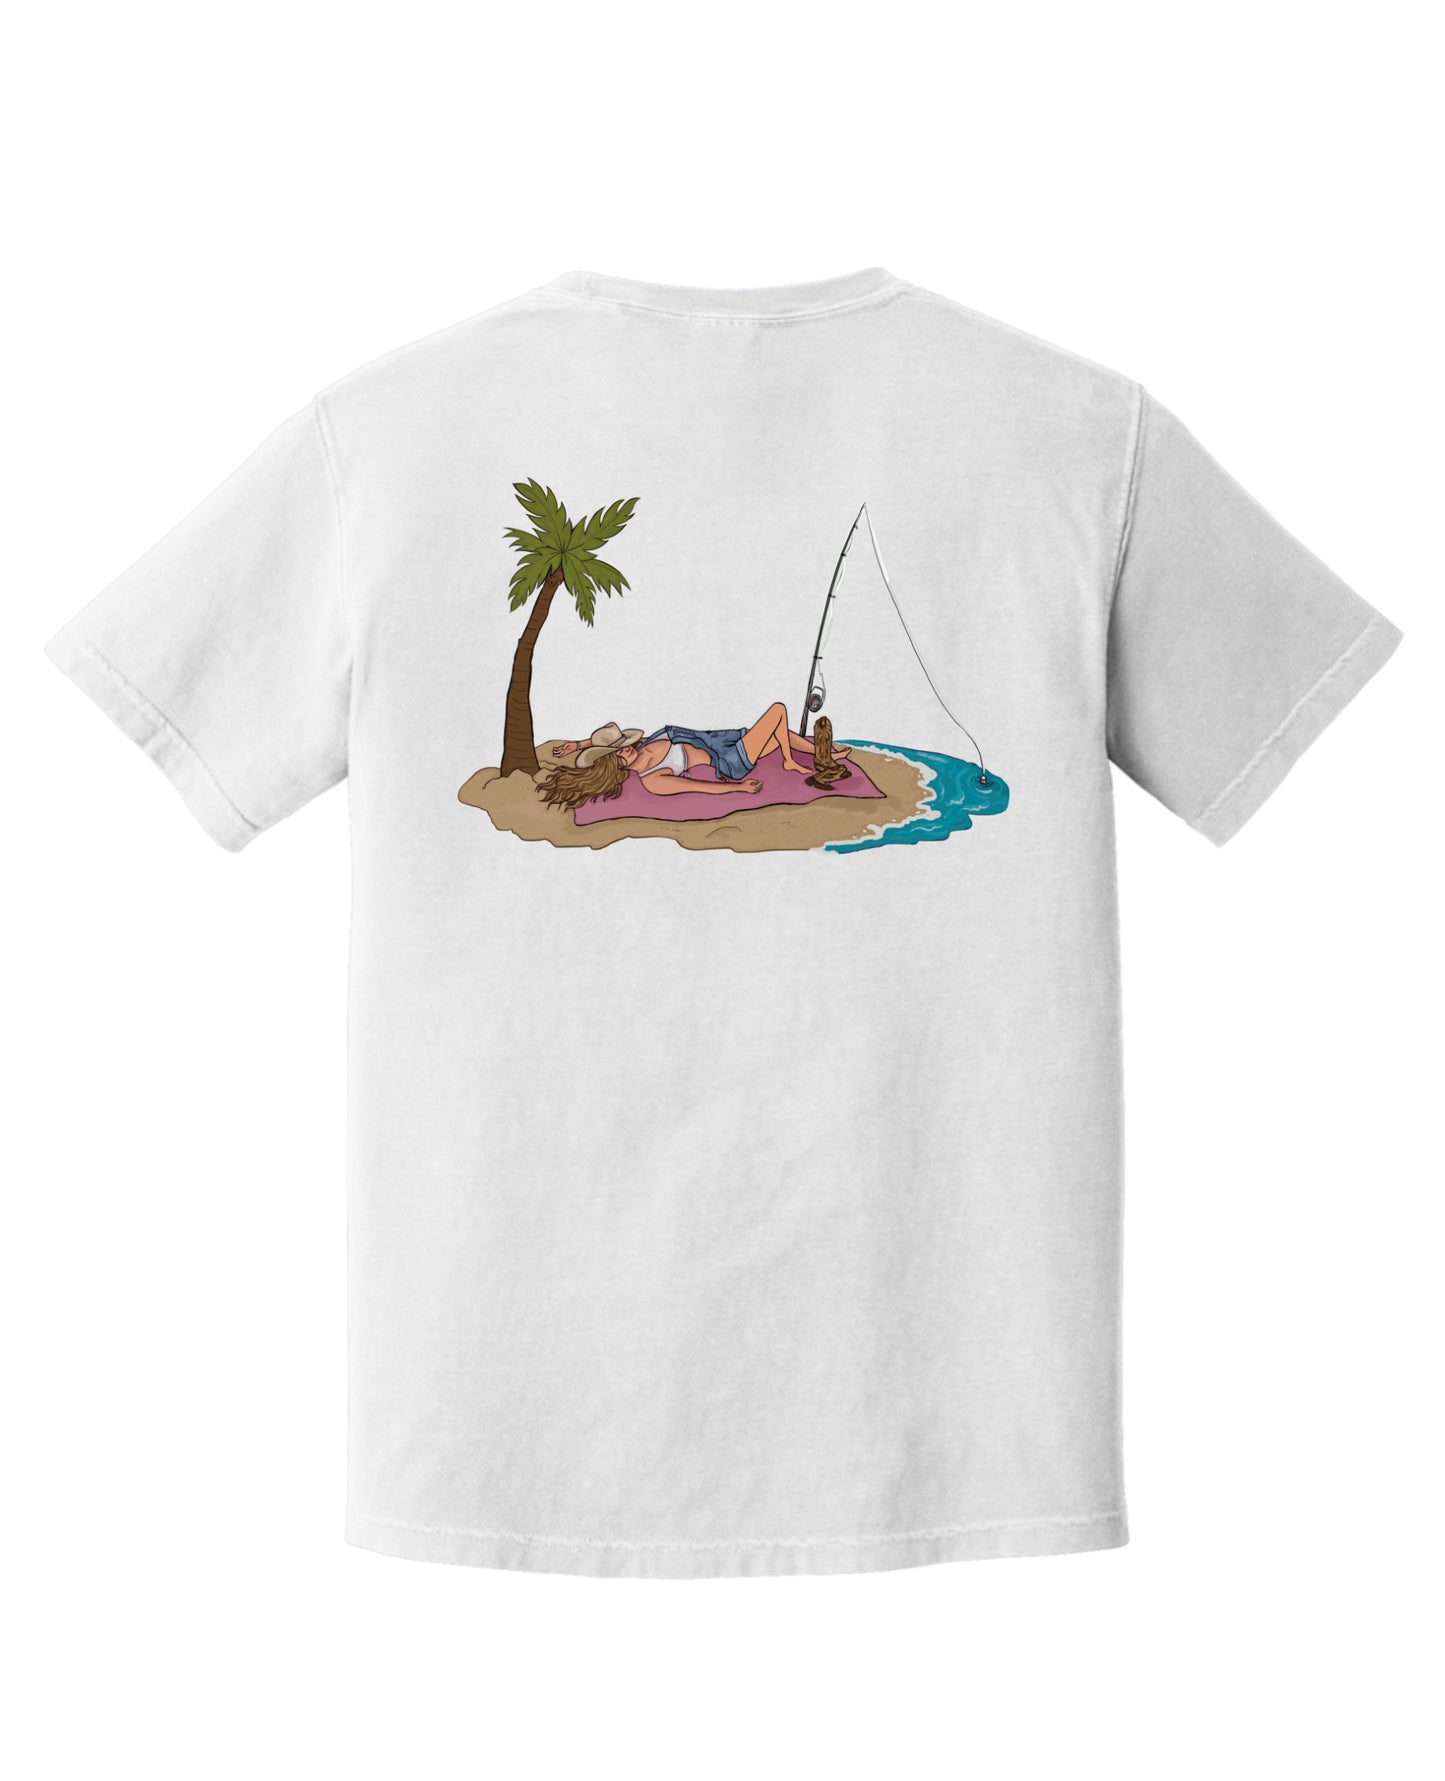 The Coastal Cowgirl T-Shirt